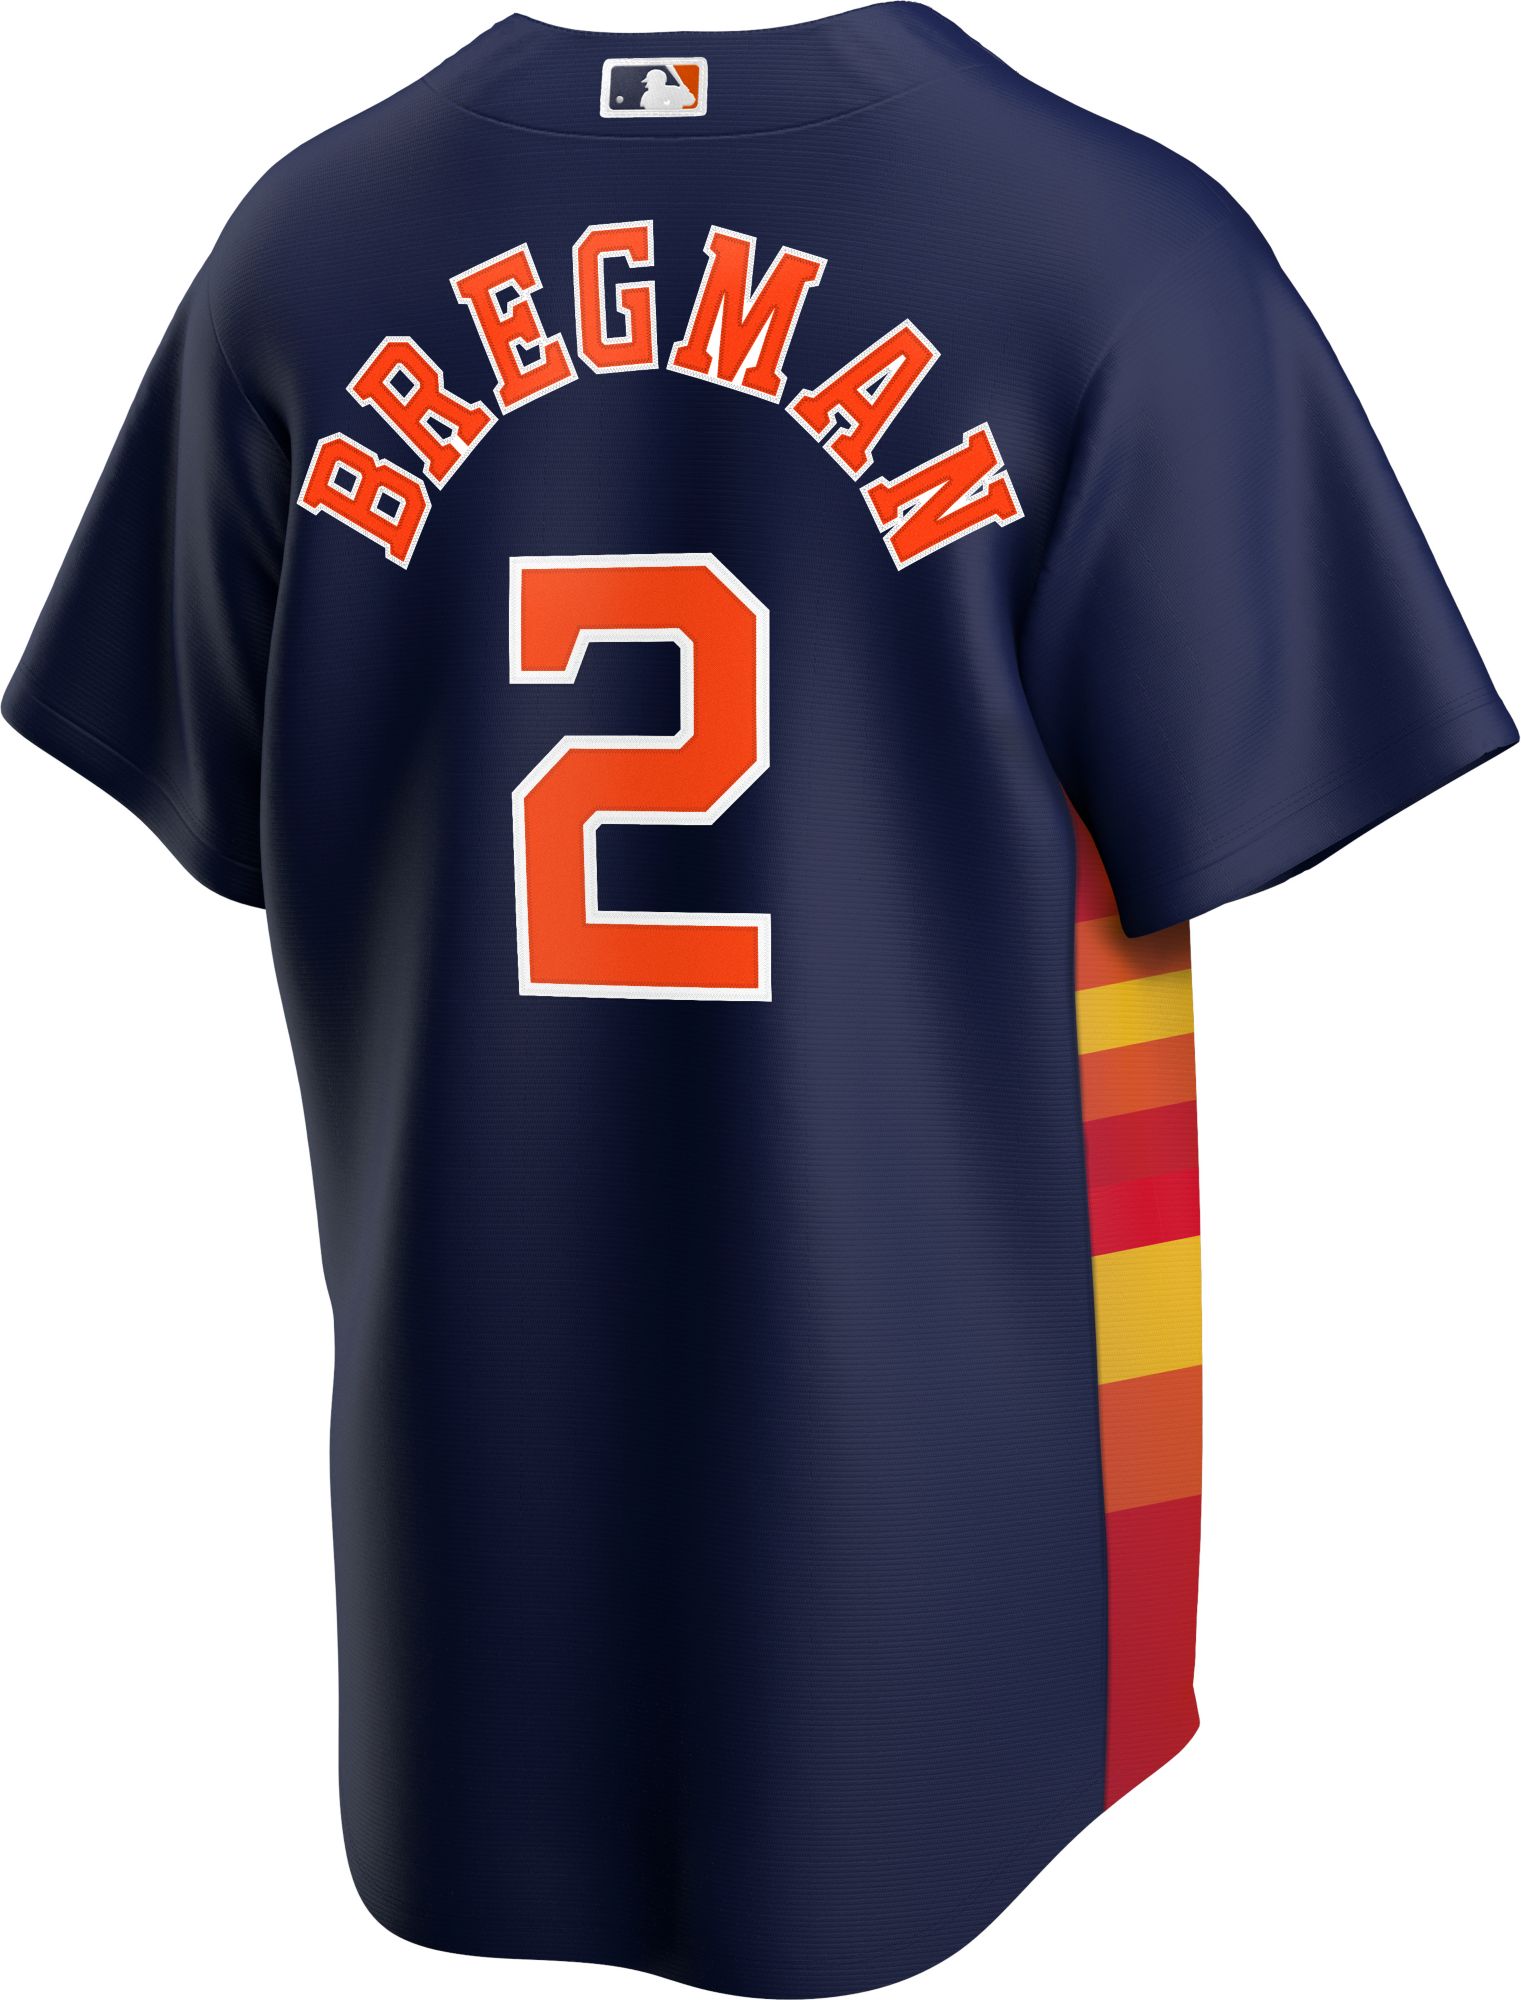 alex bregman rainbow jersey